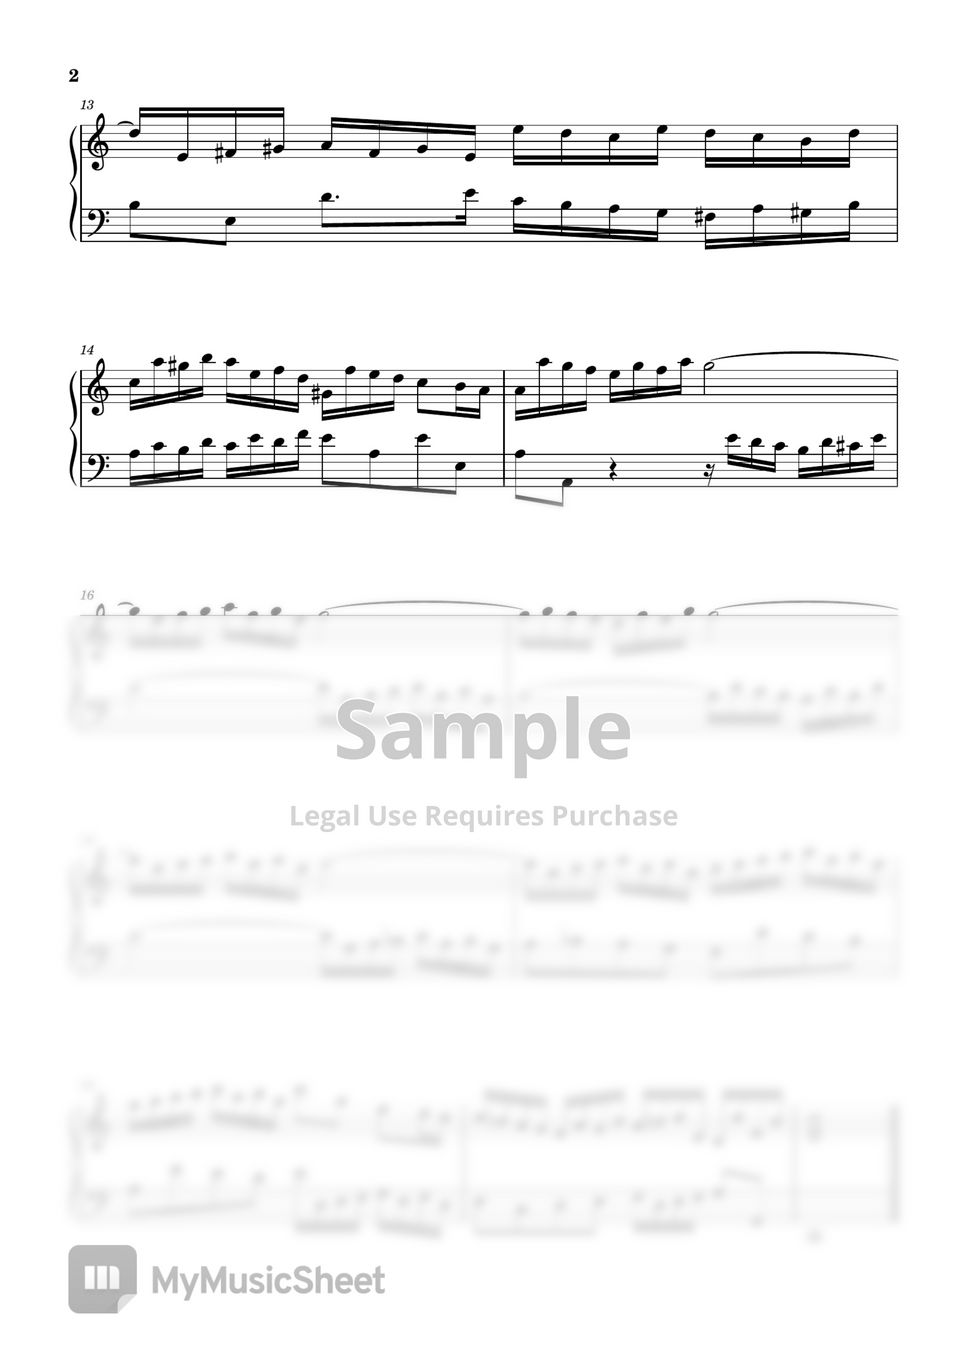 Johann Sebastian Bach - Invention No. 1 (Medium) by Anime Piano Tutorials